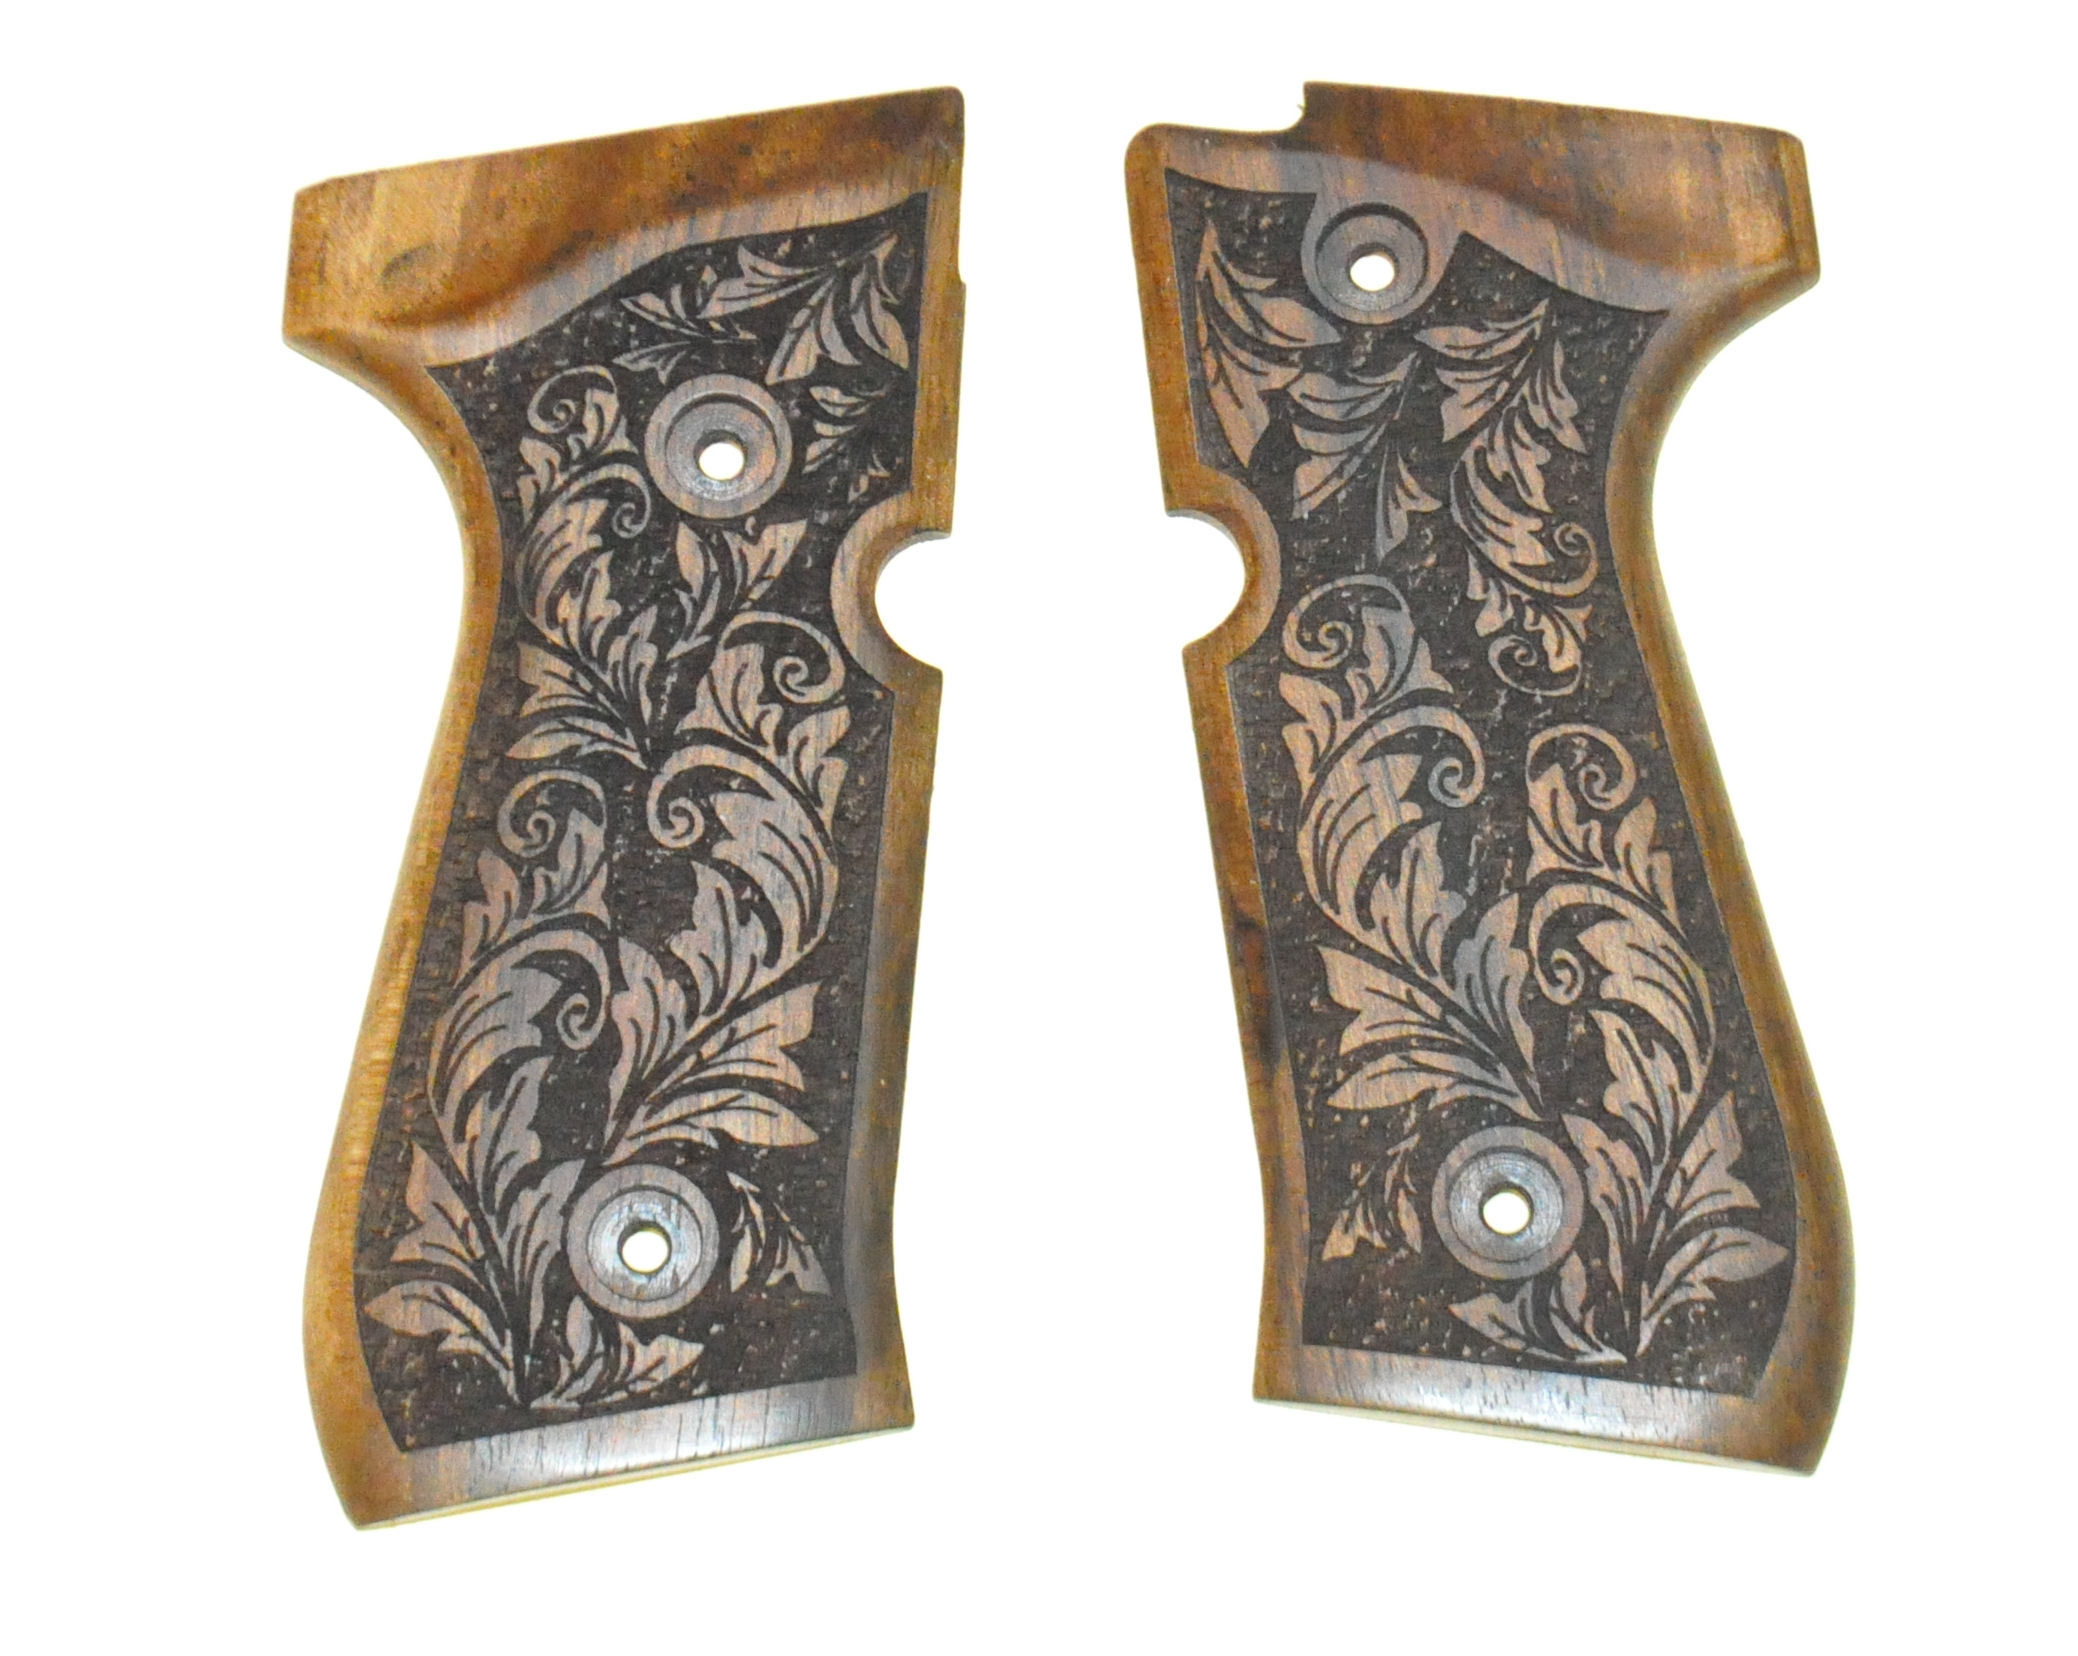 Beretta 92 grips carving